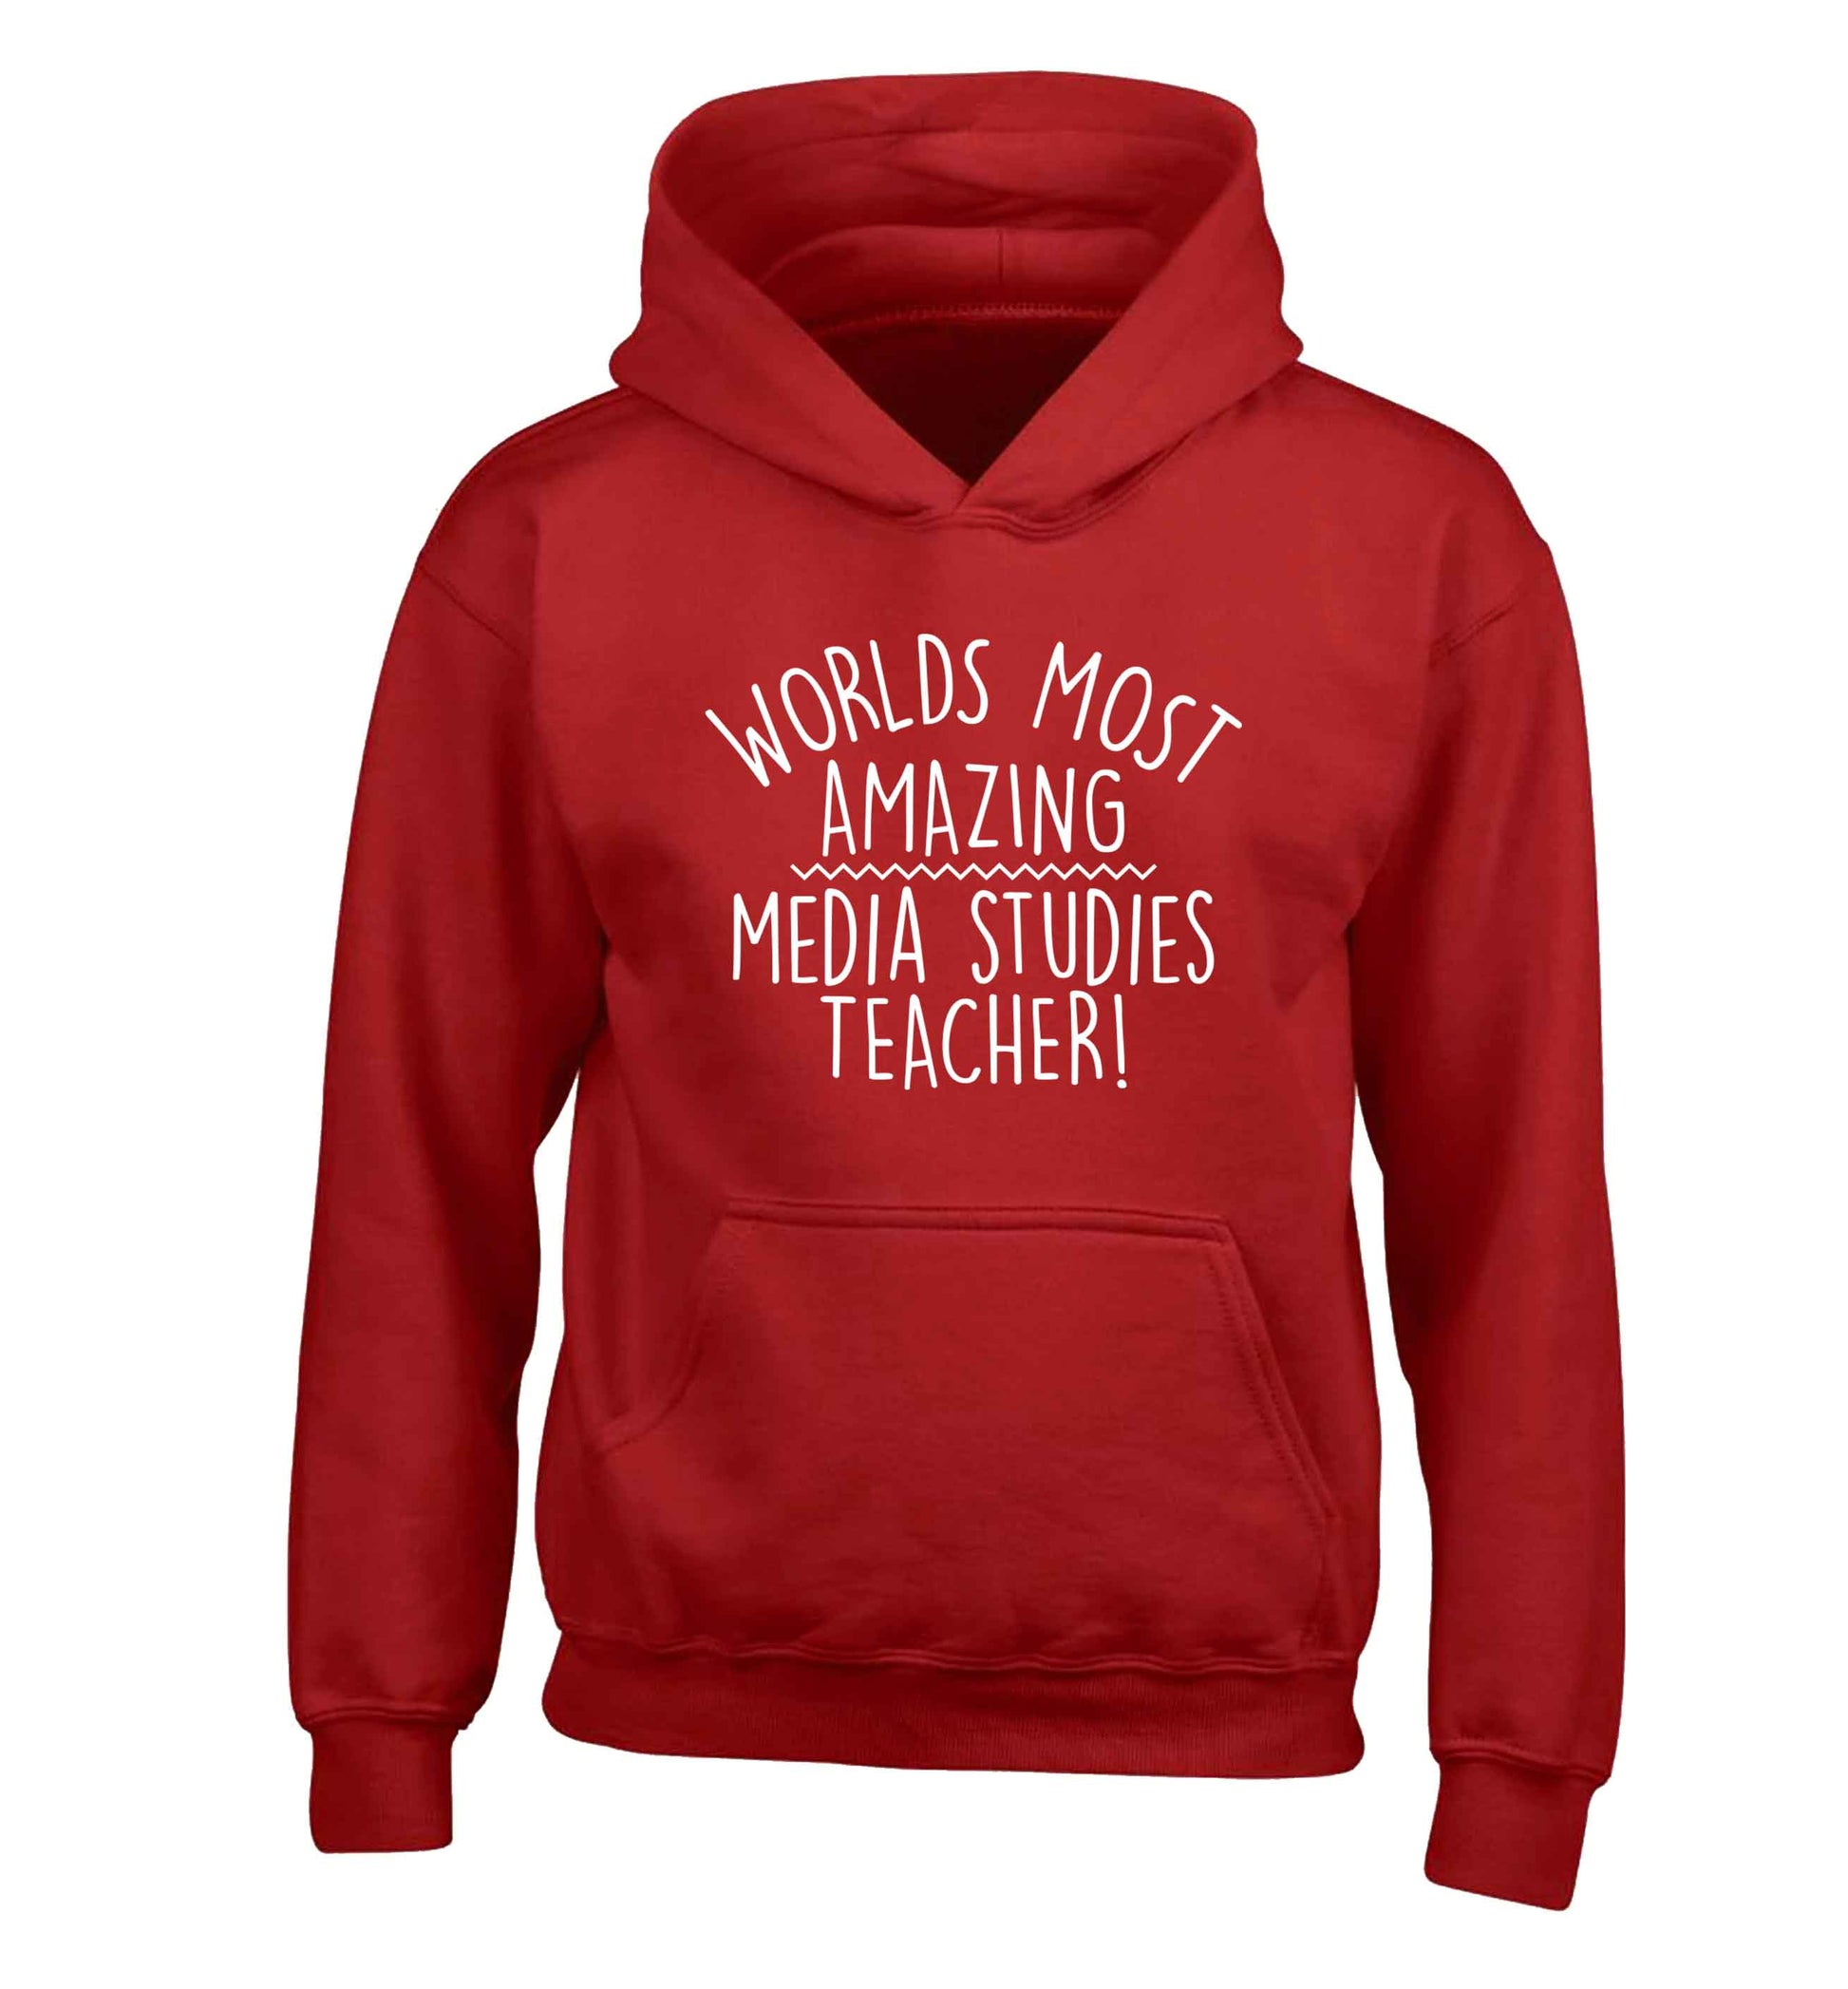 Worlds most amazing media studies teacher children's red hoodie 12-13 Years